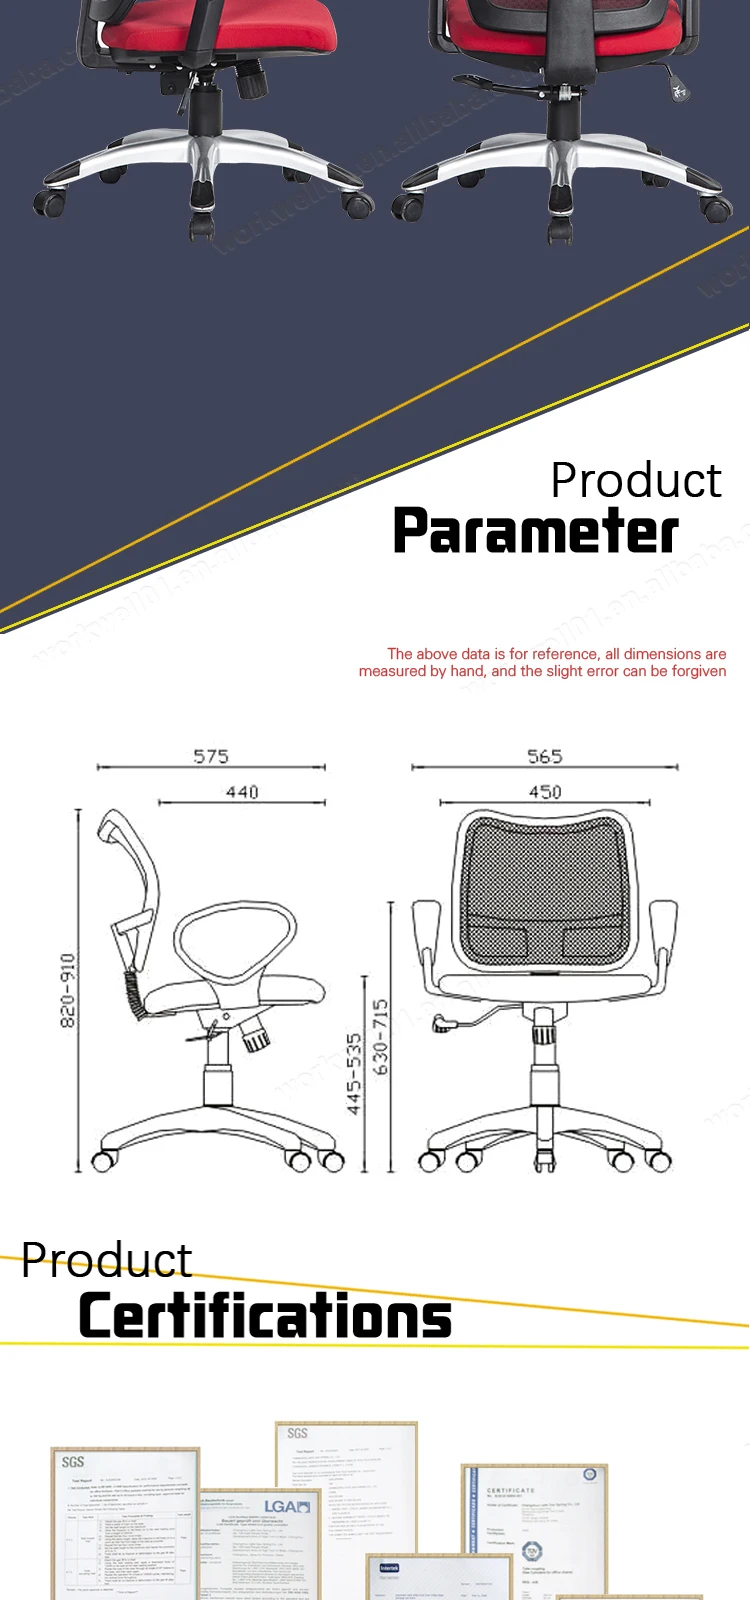 2020 Adjustable swivel office lift mesh chair 2020